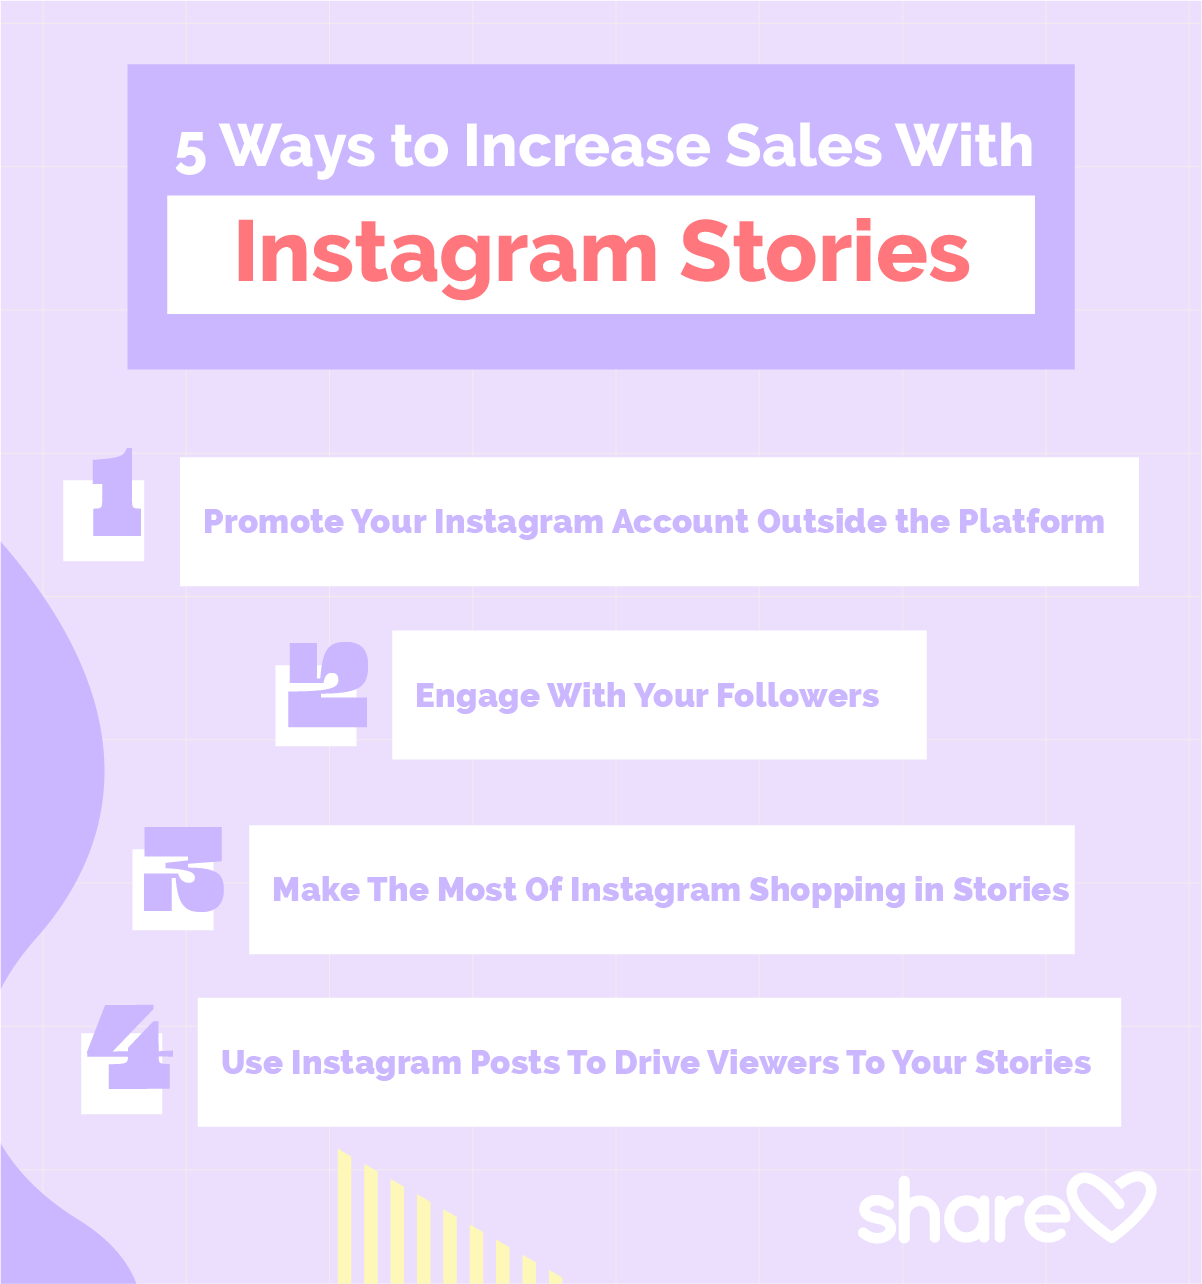 5 Ways to Increase Sales With Instagram Stories